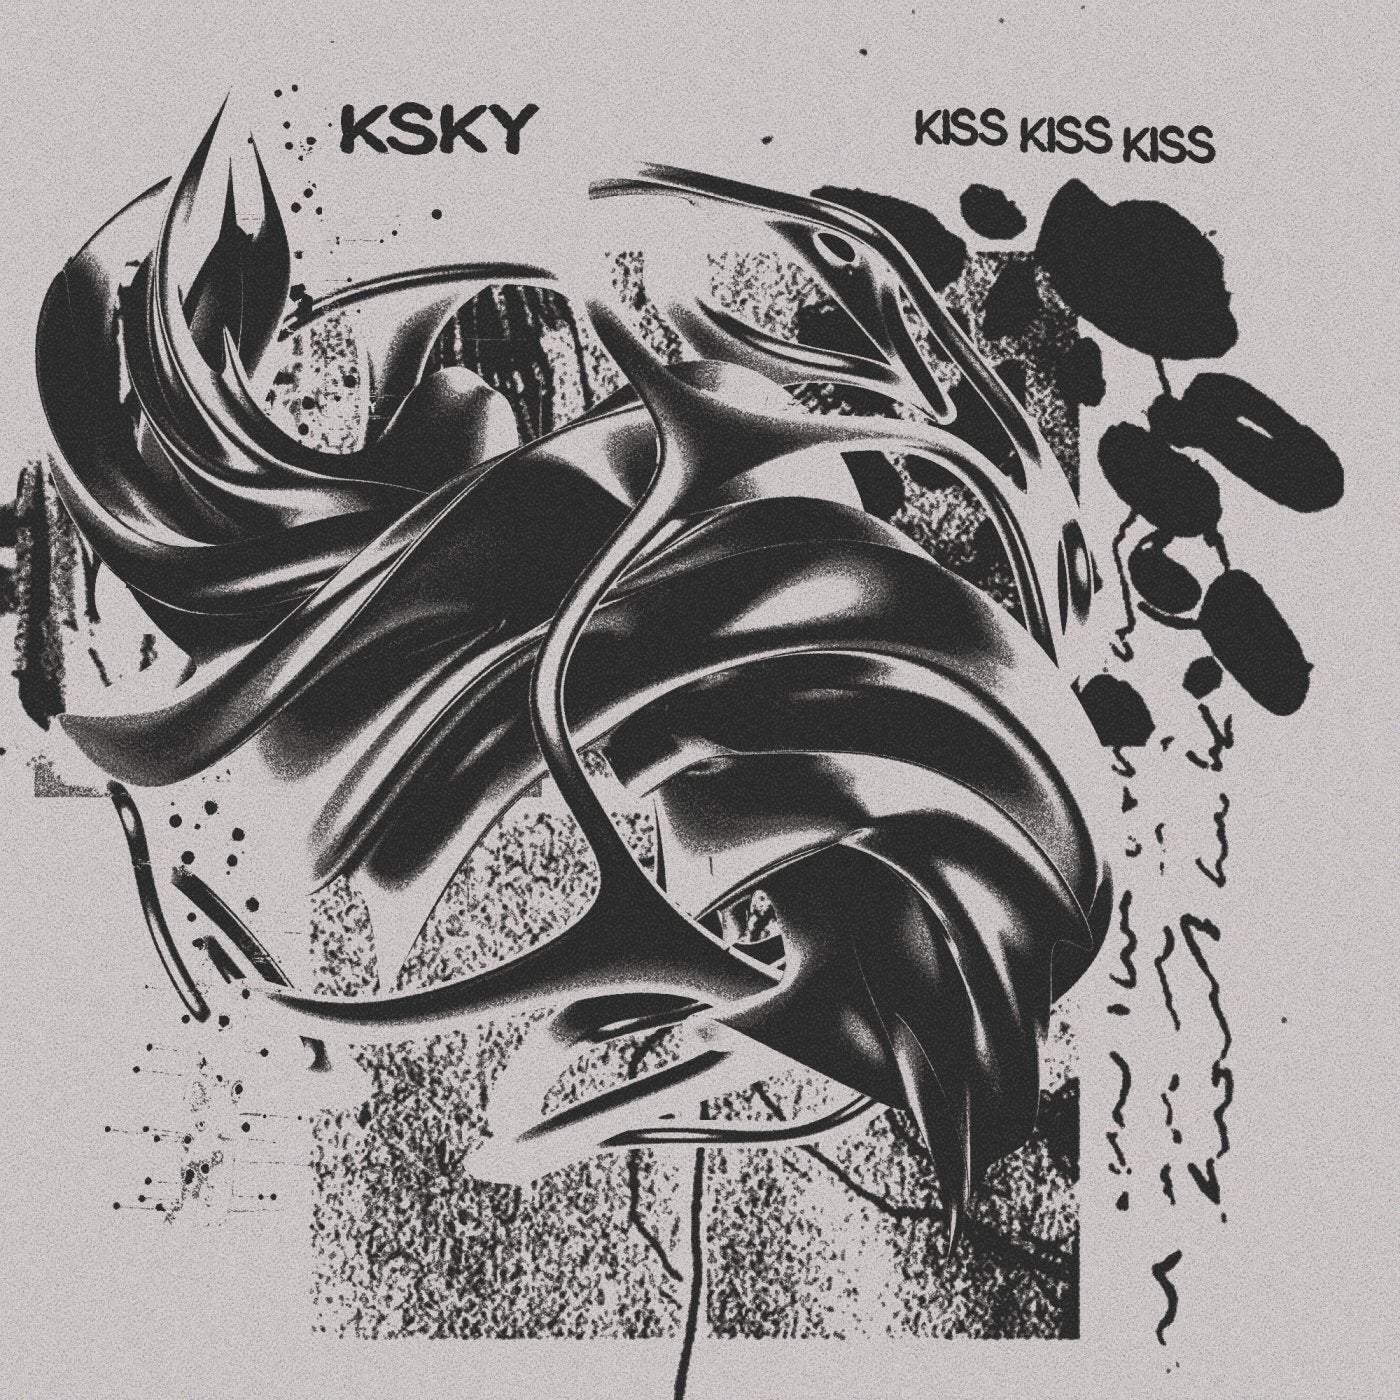 Download Ksky - Kiss Kiss Kiss on Electrobuzz